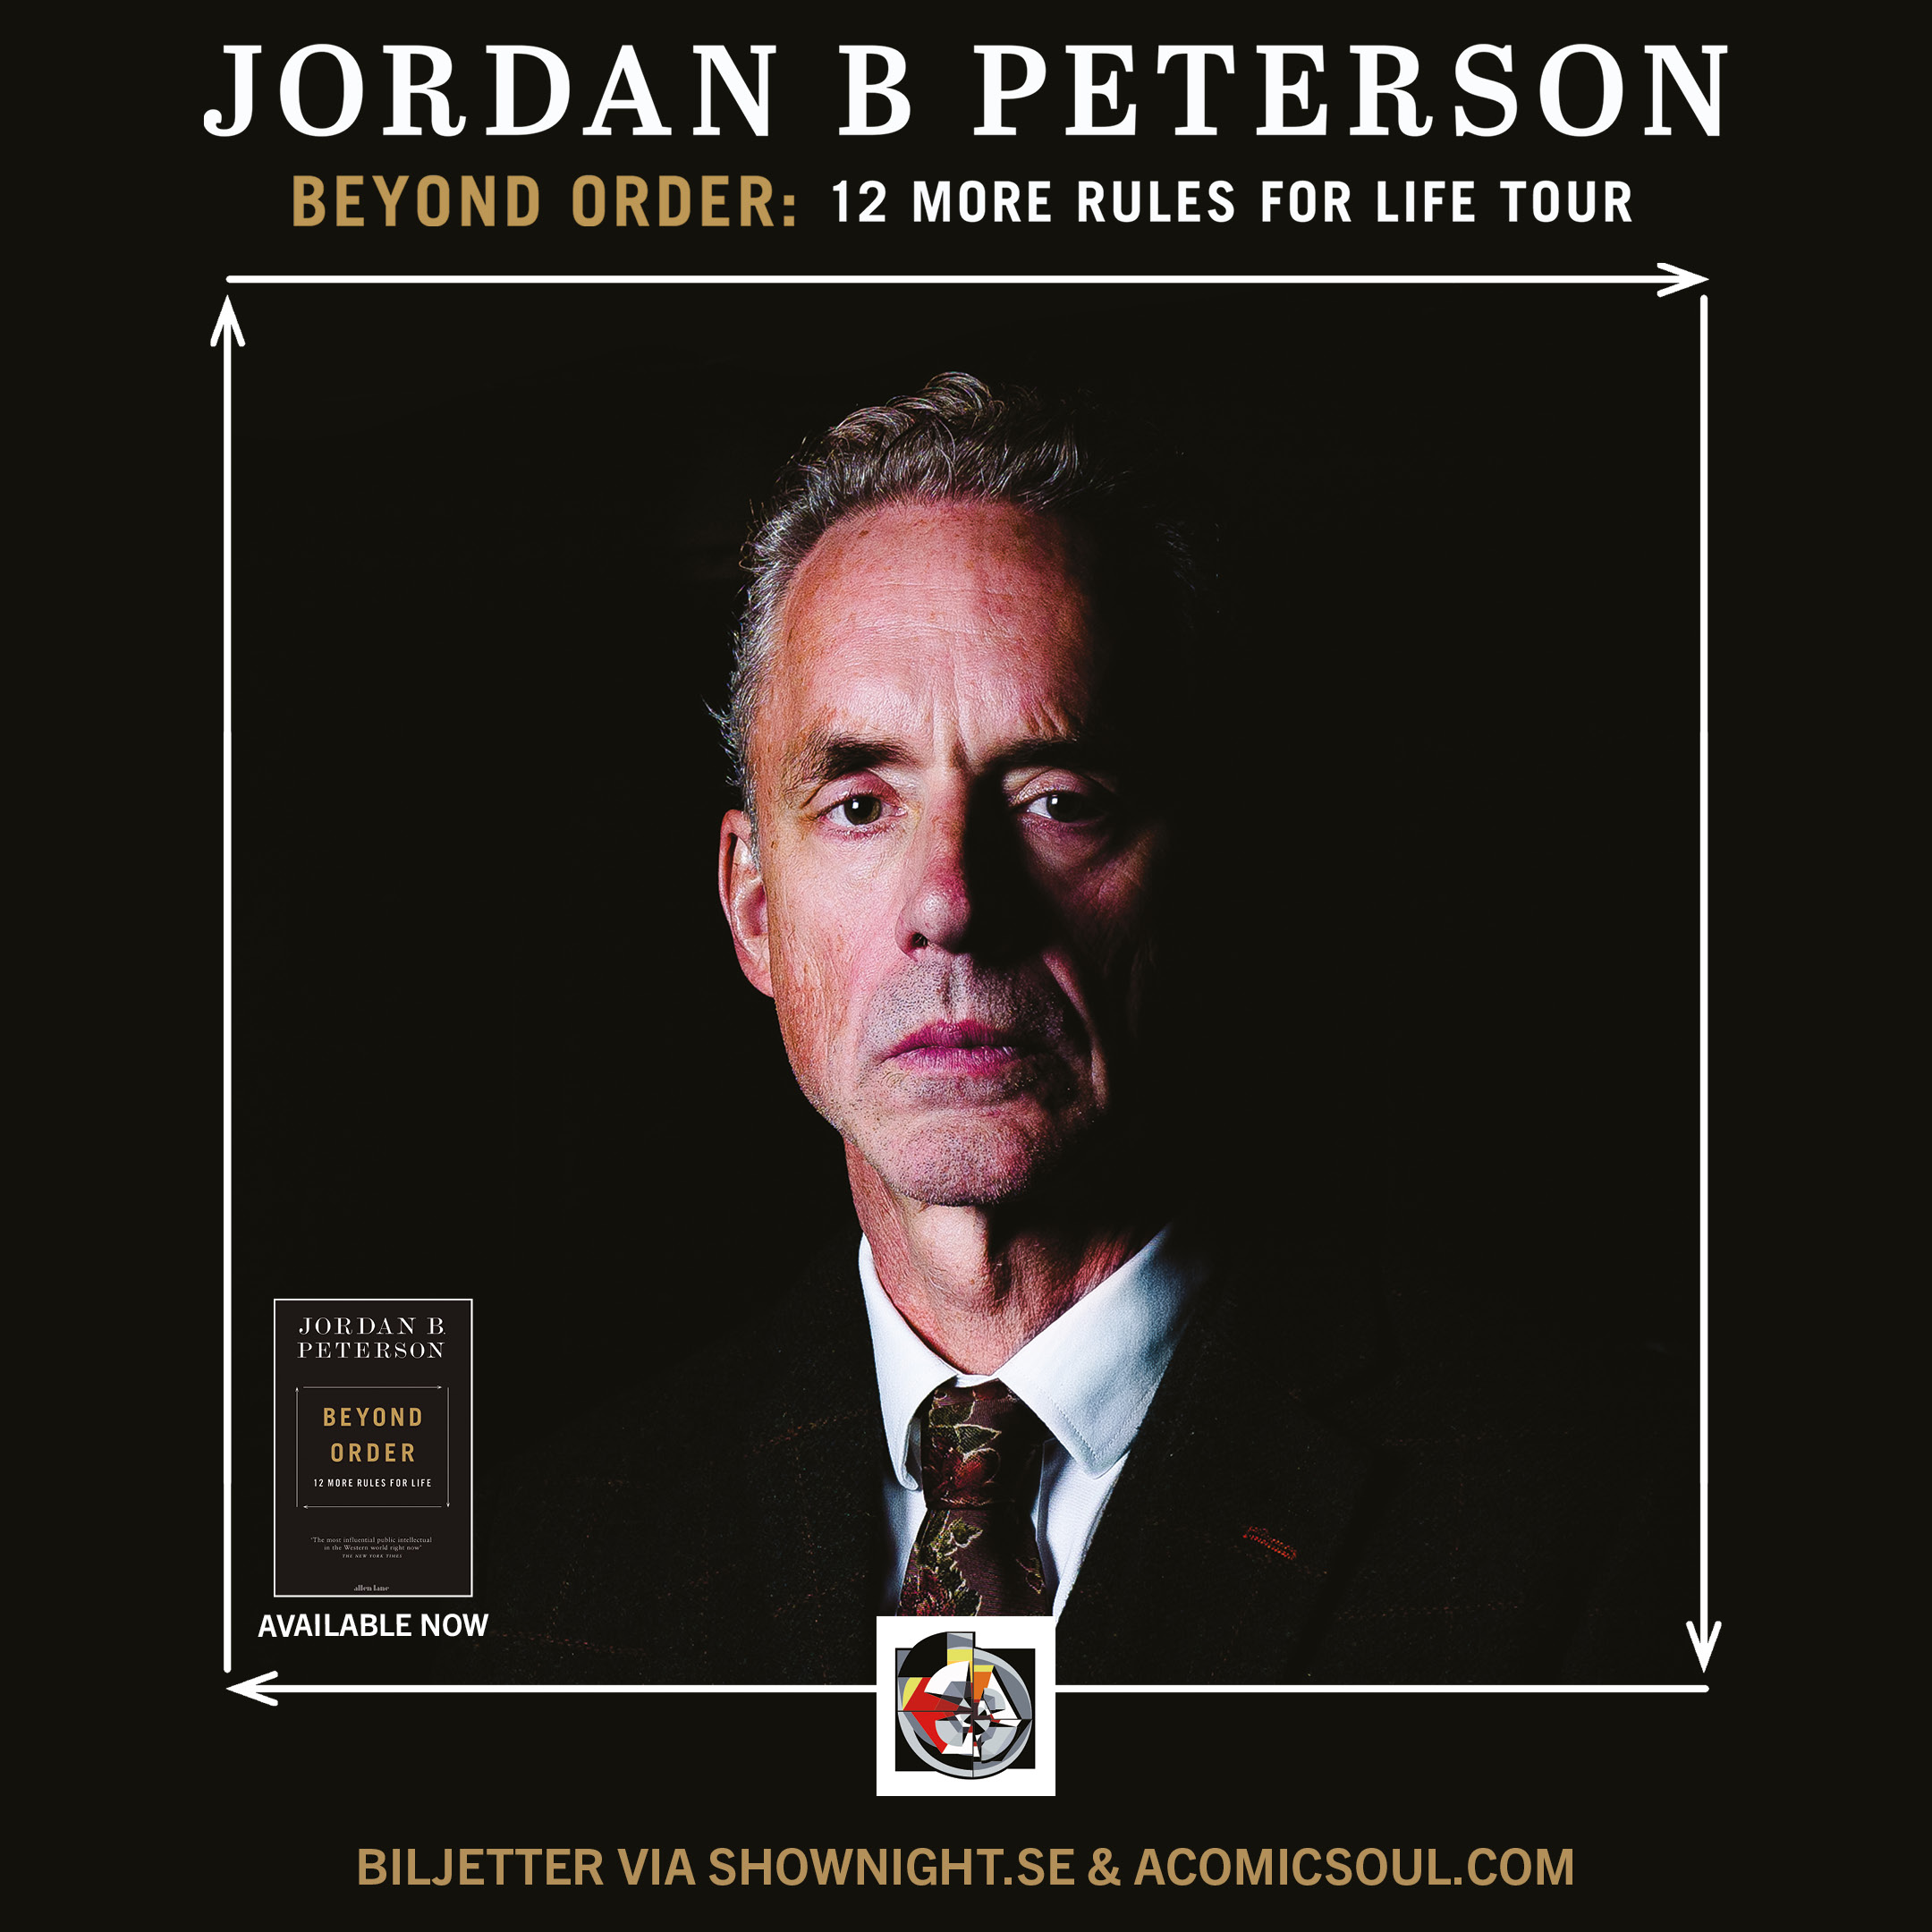 Jordan B Peterson